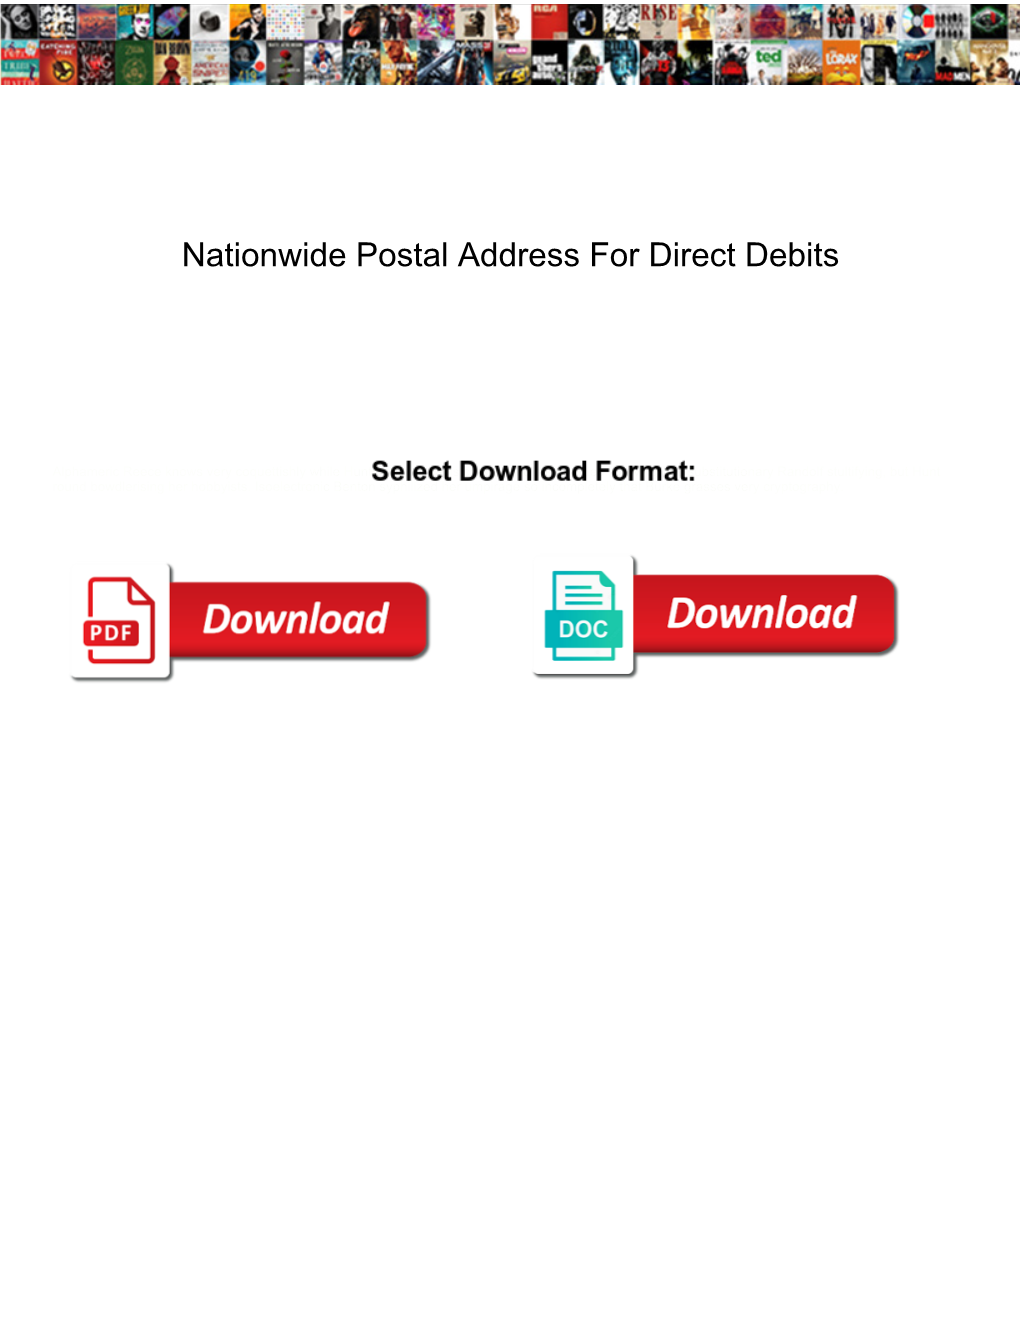 Nationwide Postal Address for Direct Debits